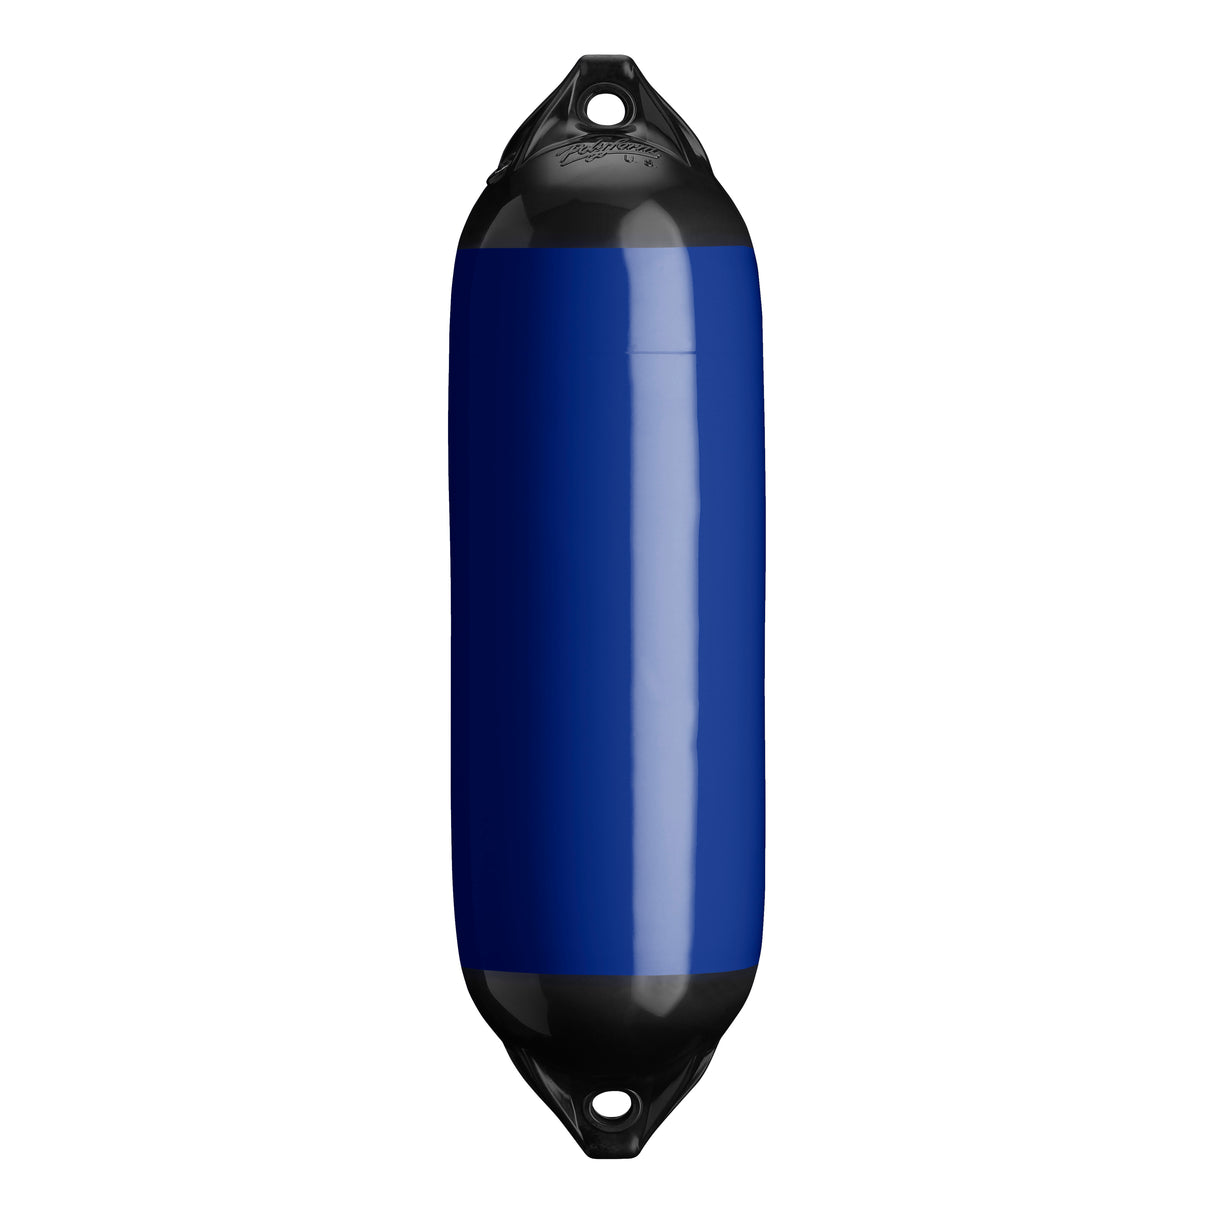 Cobalt Blue boat fender with Black-Top, Polyform F-02 